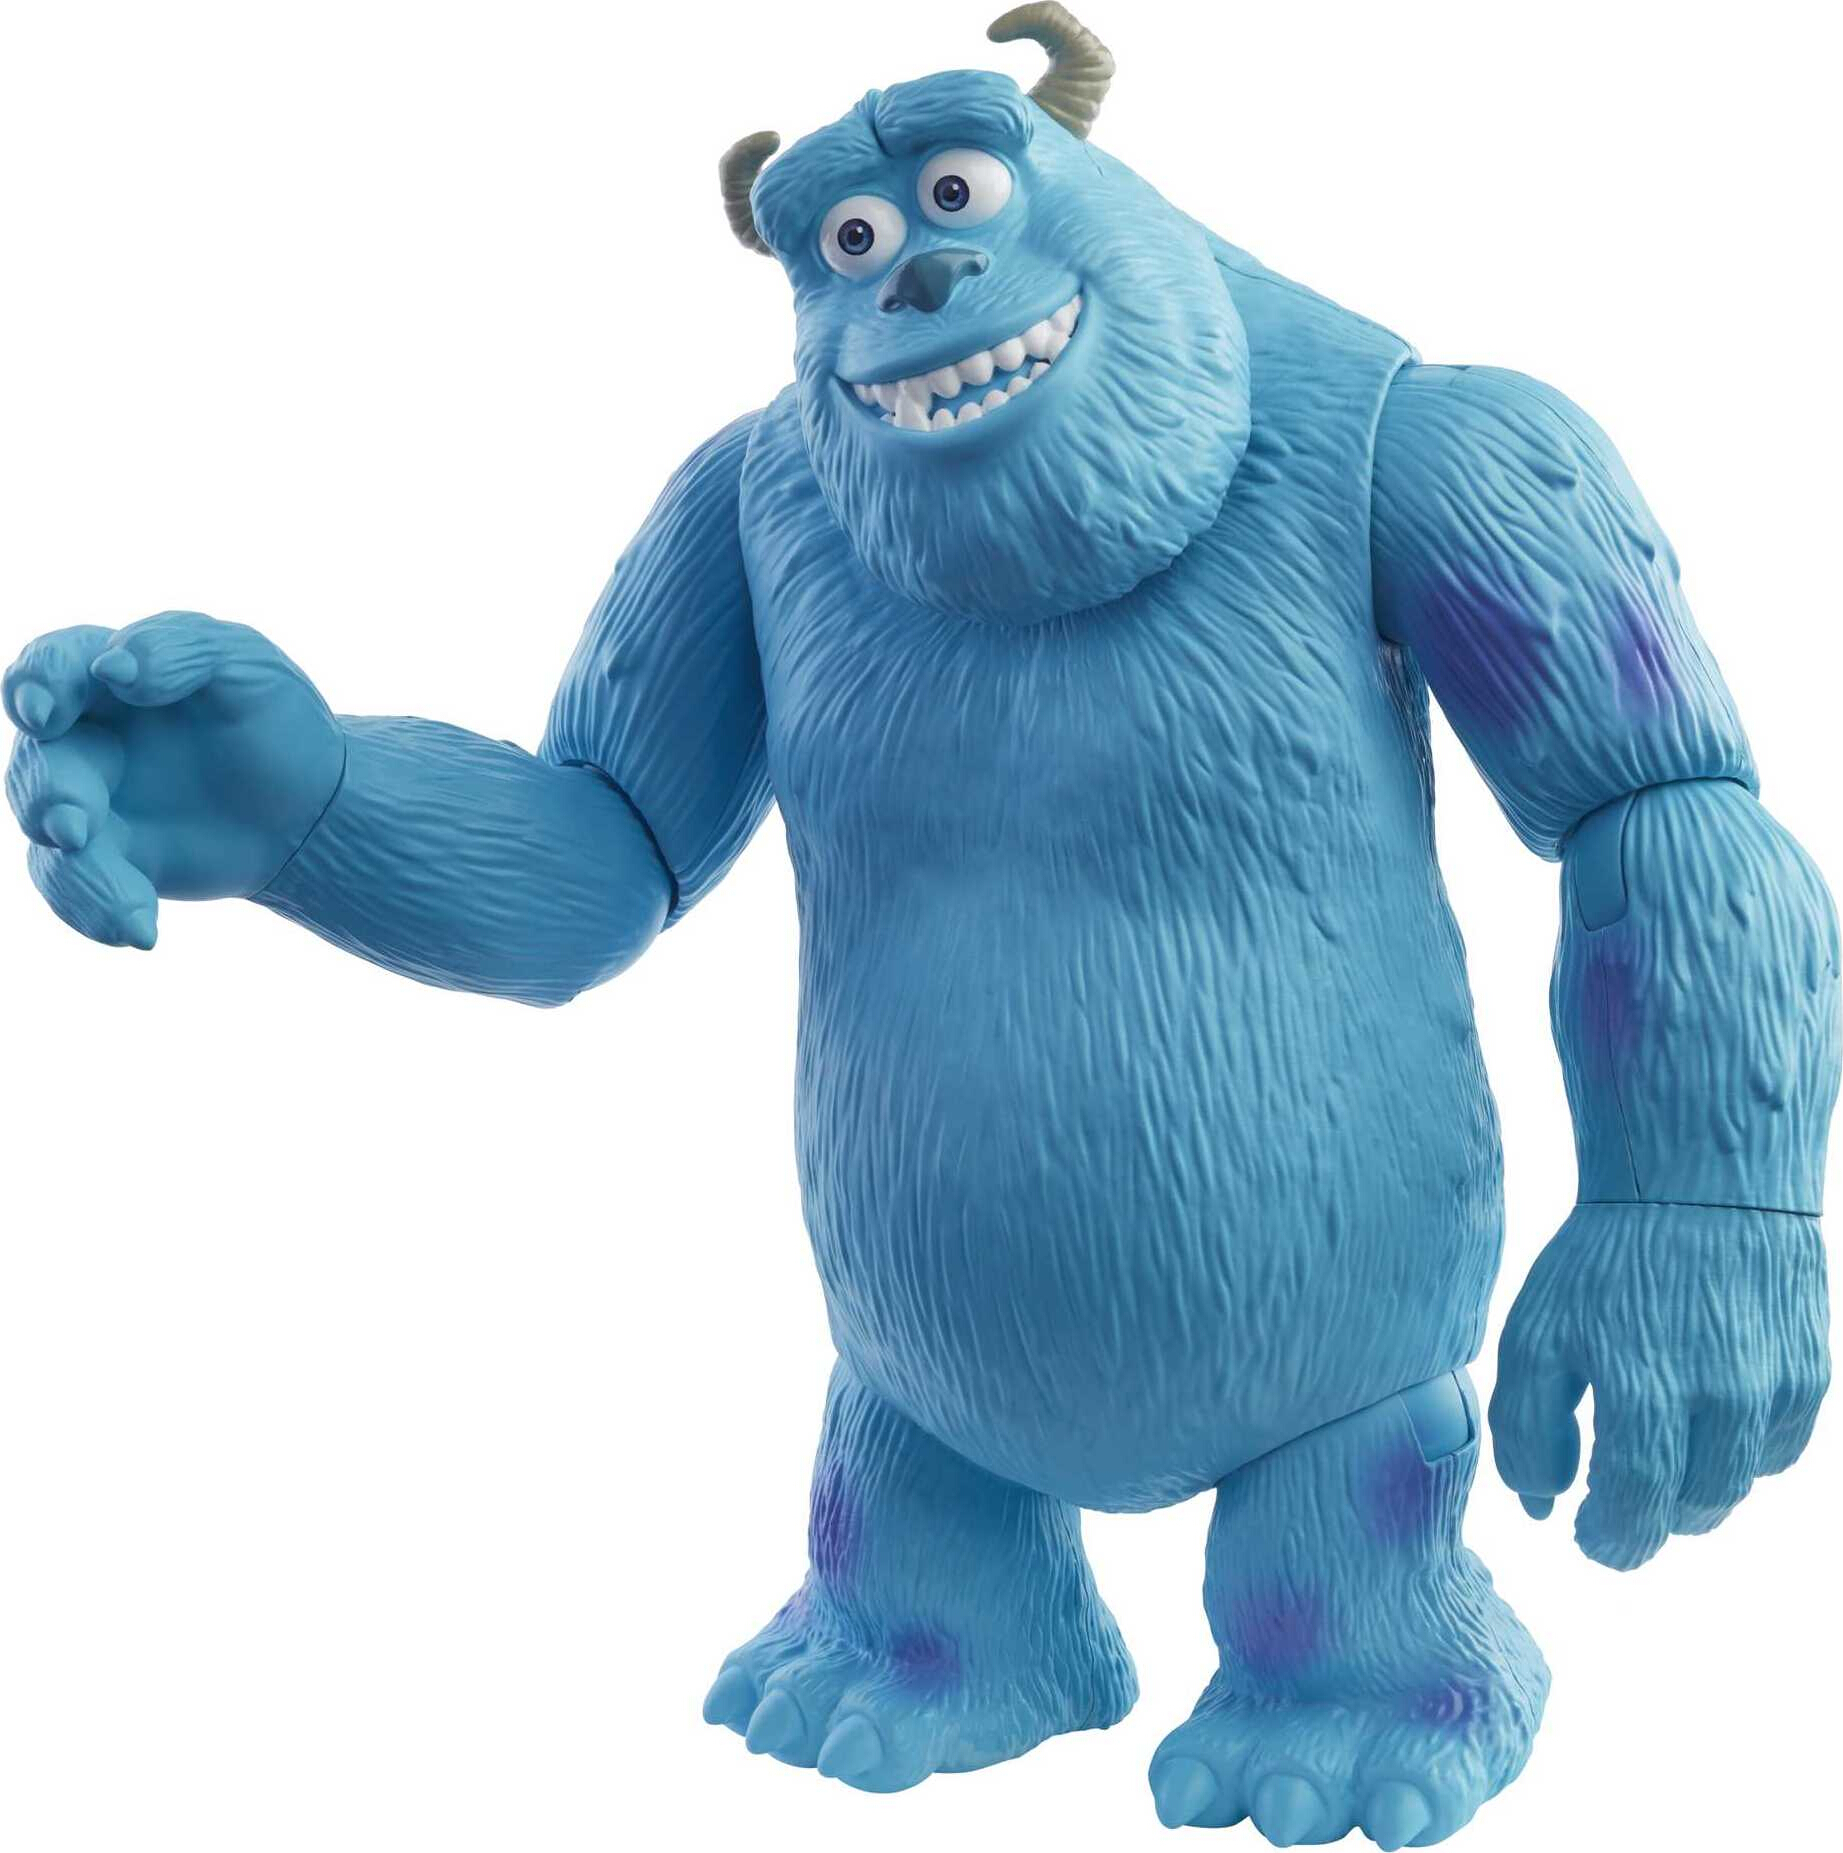 Disney Pixar Monsters Inc Action Figure Sulley James P Sullivan Character - image 1 of 7